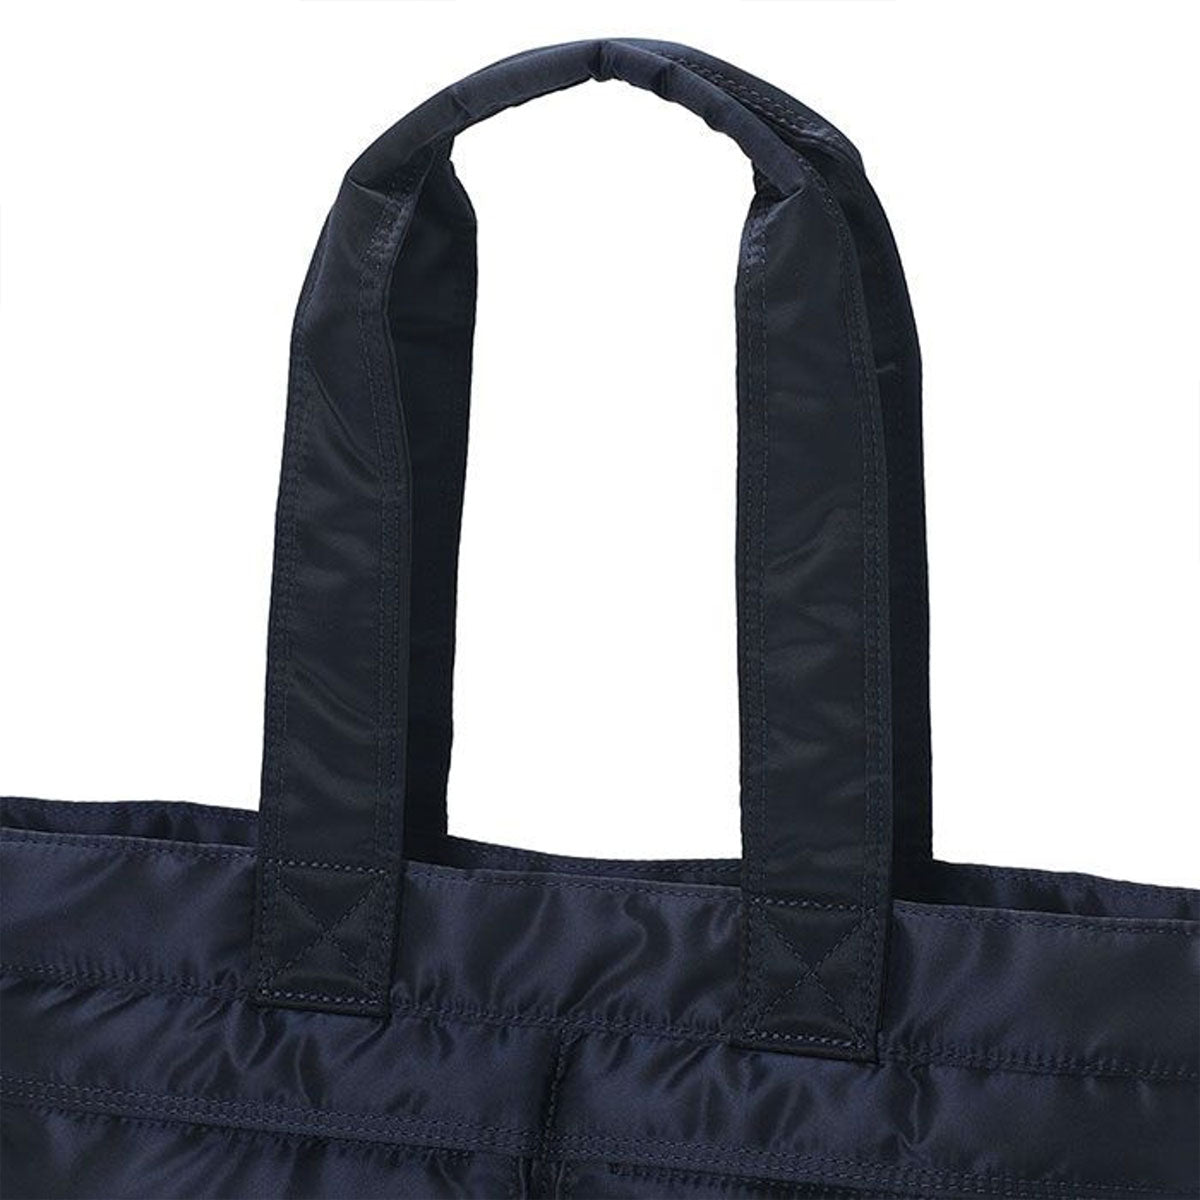 HEAD PORTER BLACK BEAUTY Waist bag limited From JAPAN